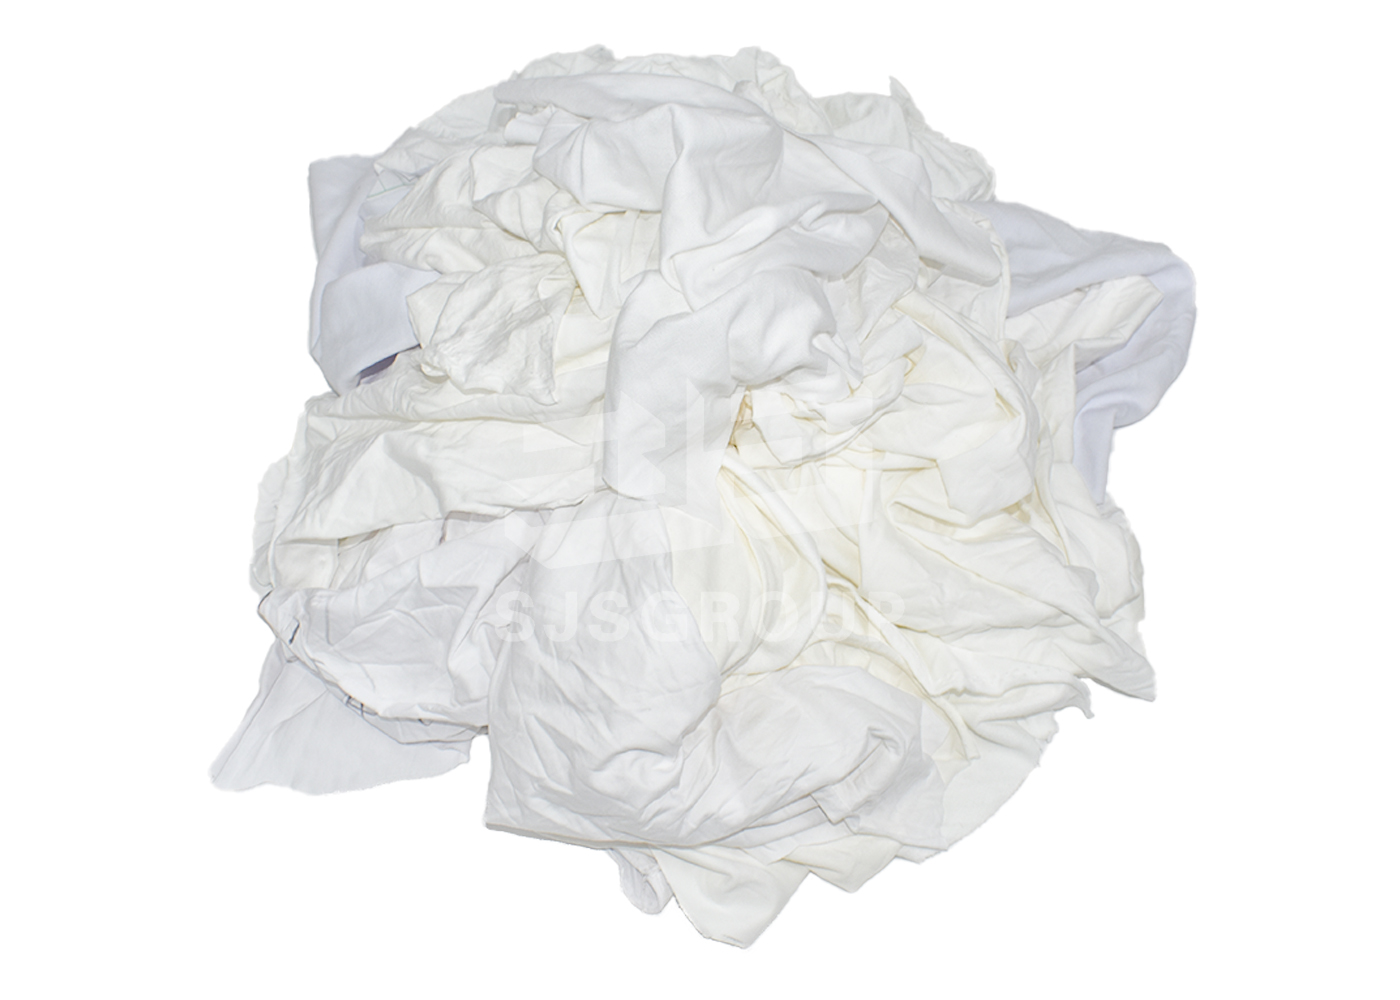 New White Cotton Rags - White cotton rags new